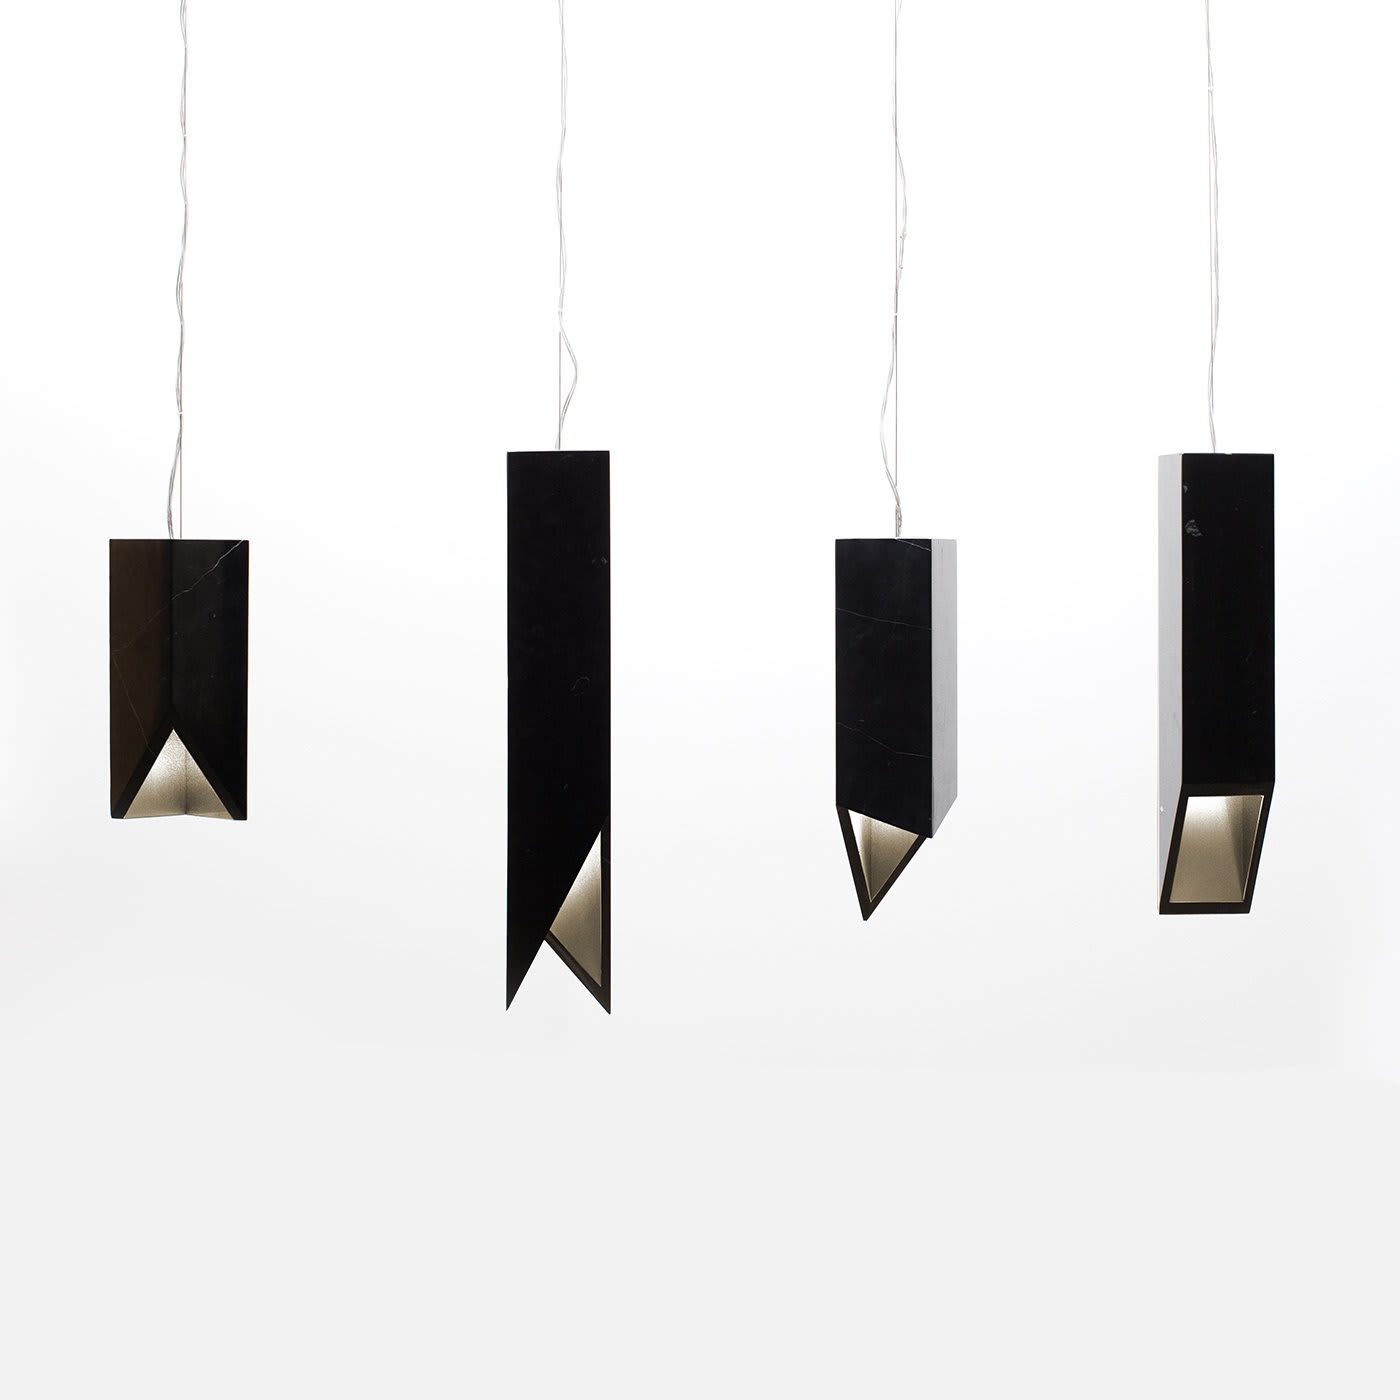 Donatello D Ceiling Lamp - Fuda Marmi by Atelier Design Lab